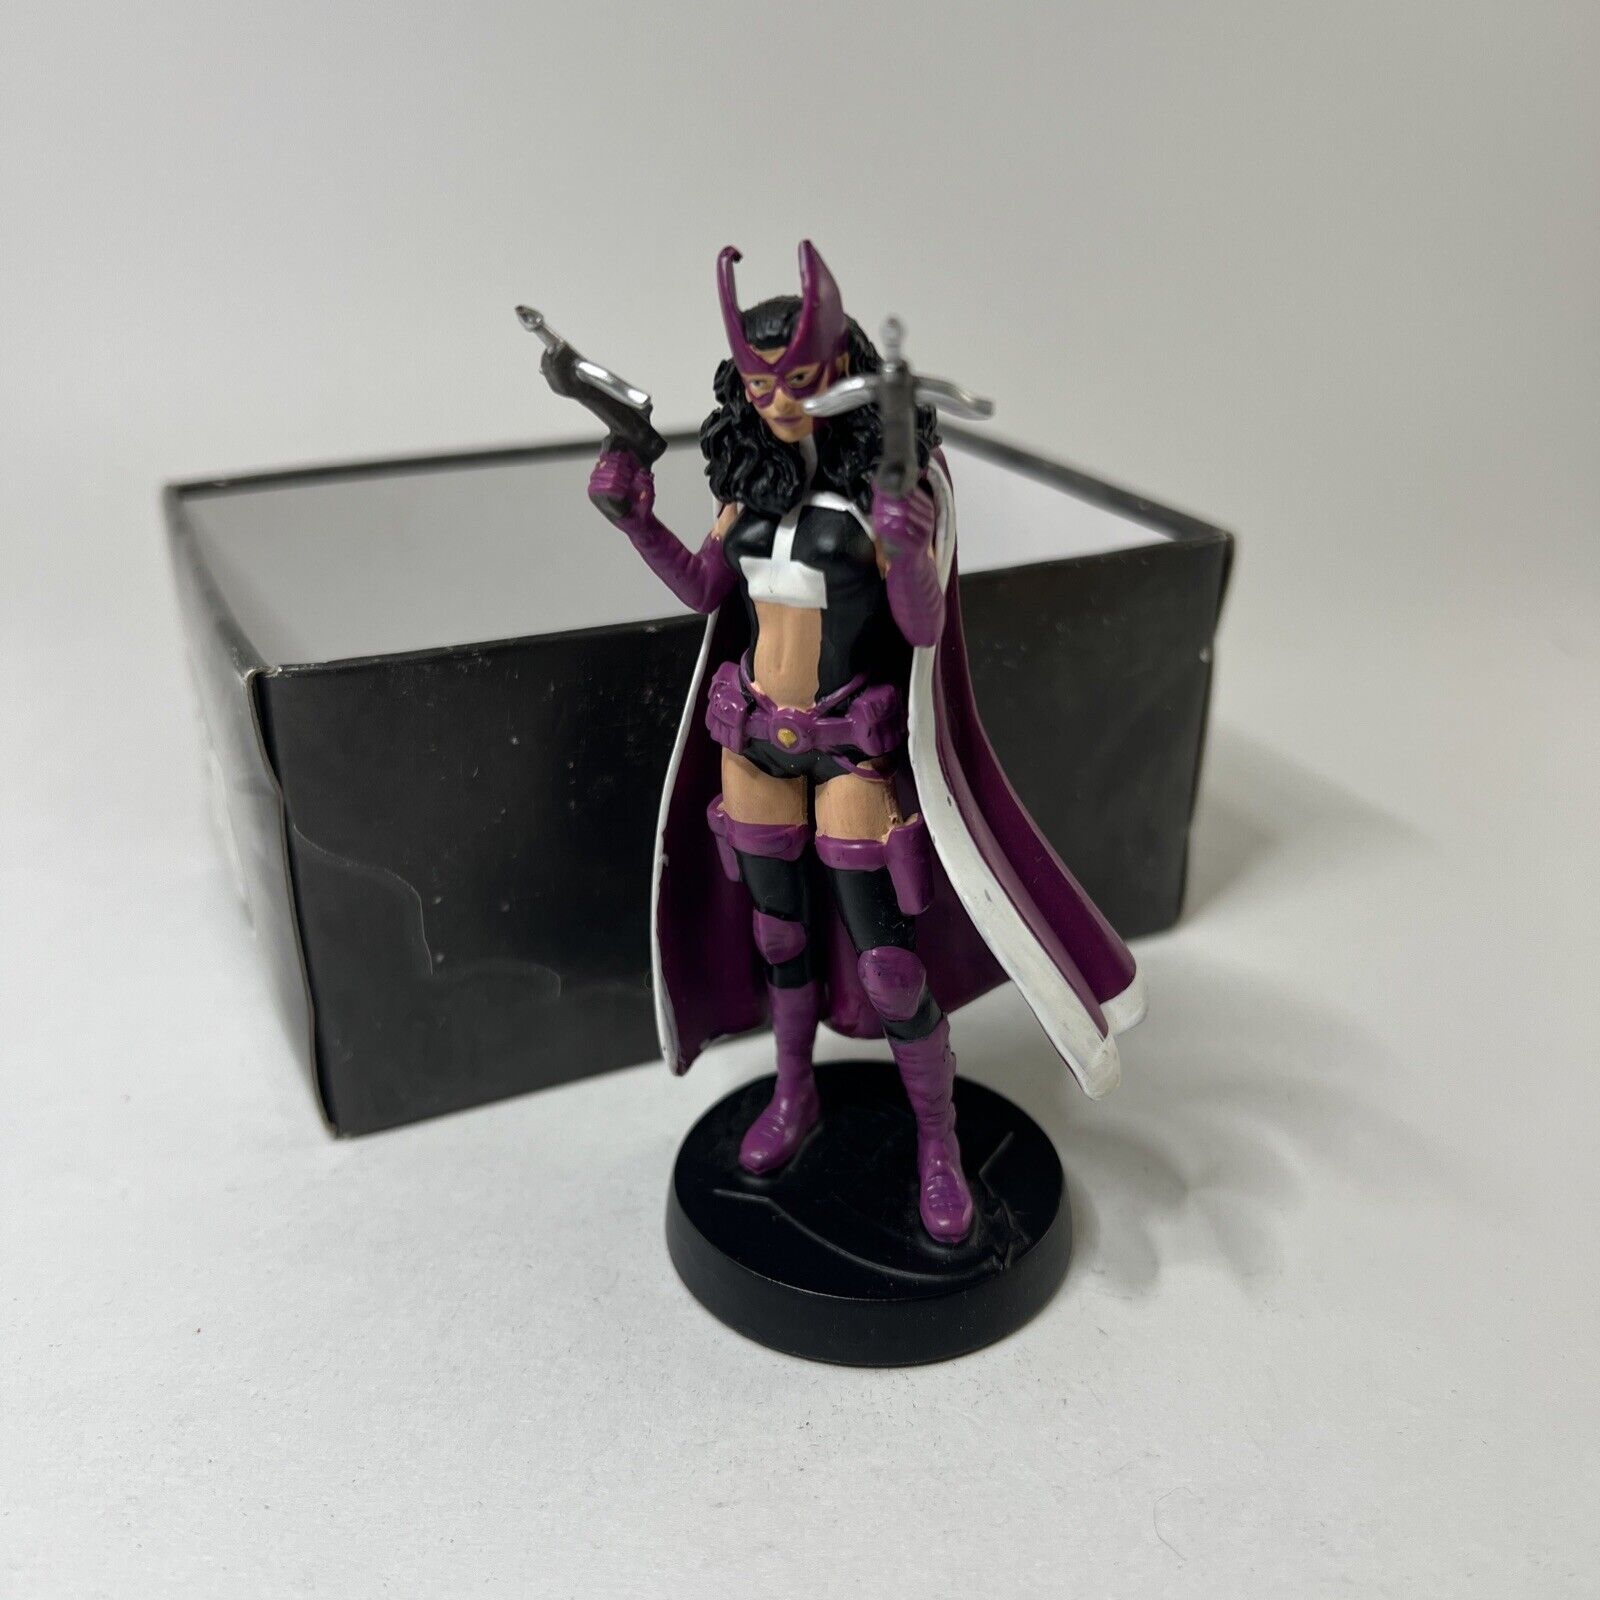 Huntress Cazadora Eaglemoss DC Superhero Collection Lead Figurine Figure